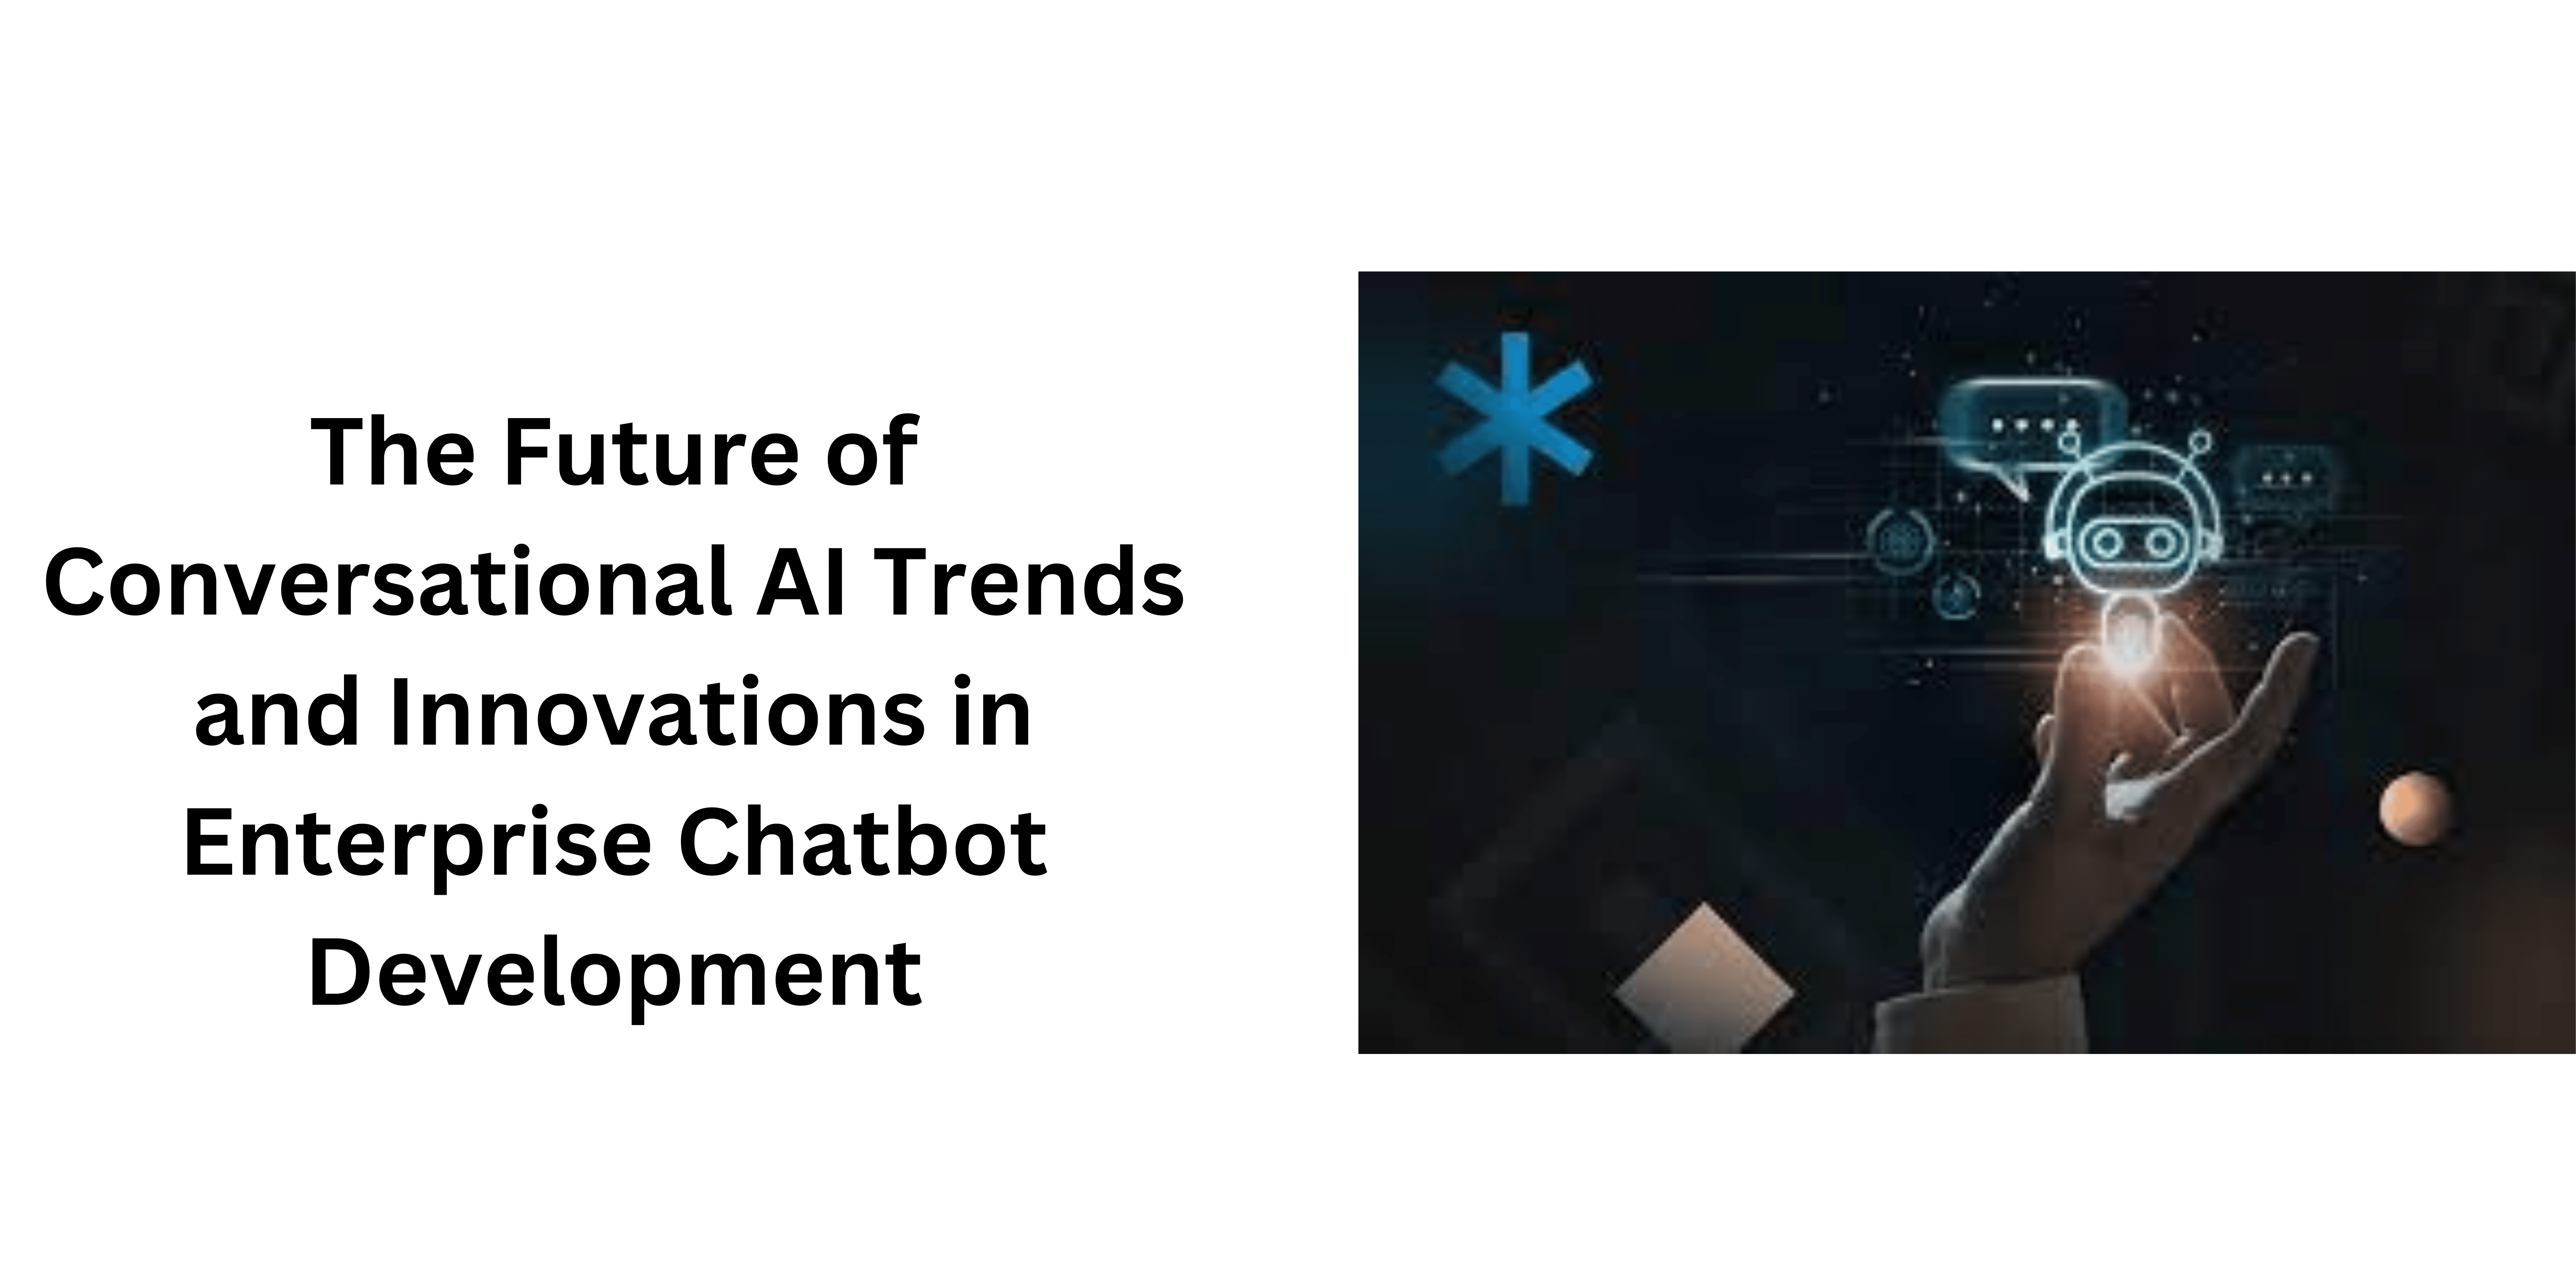 enterprise AI chatbot development.